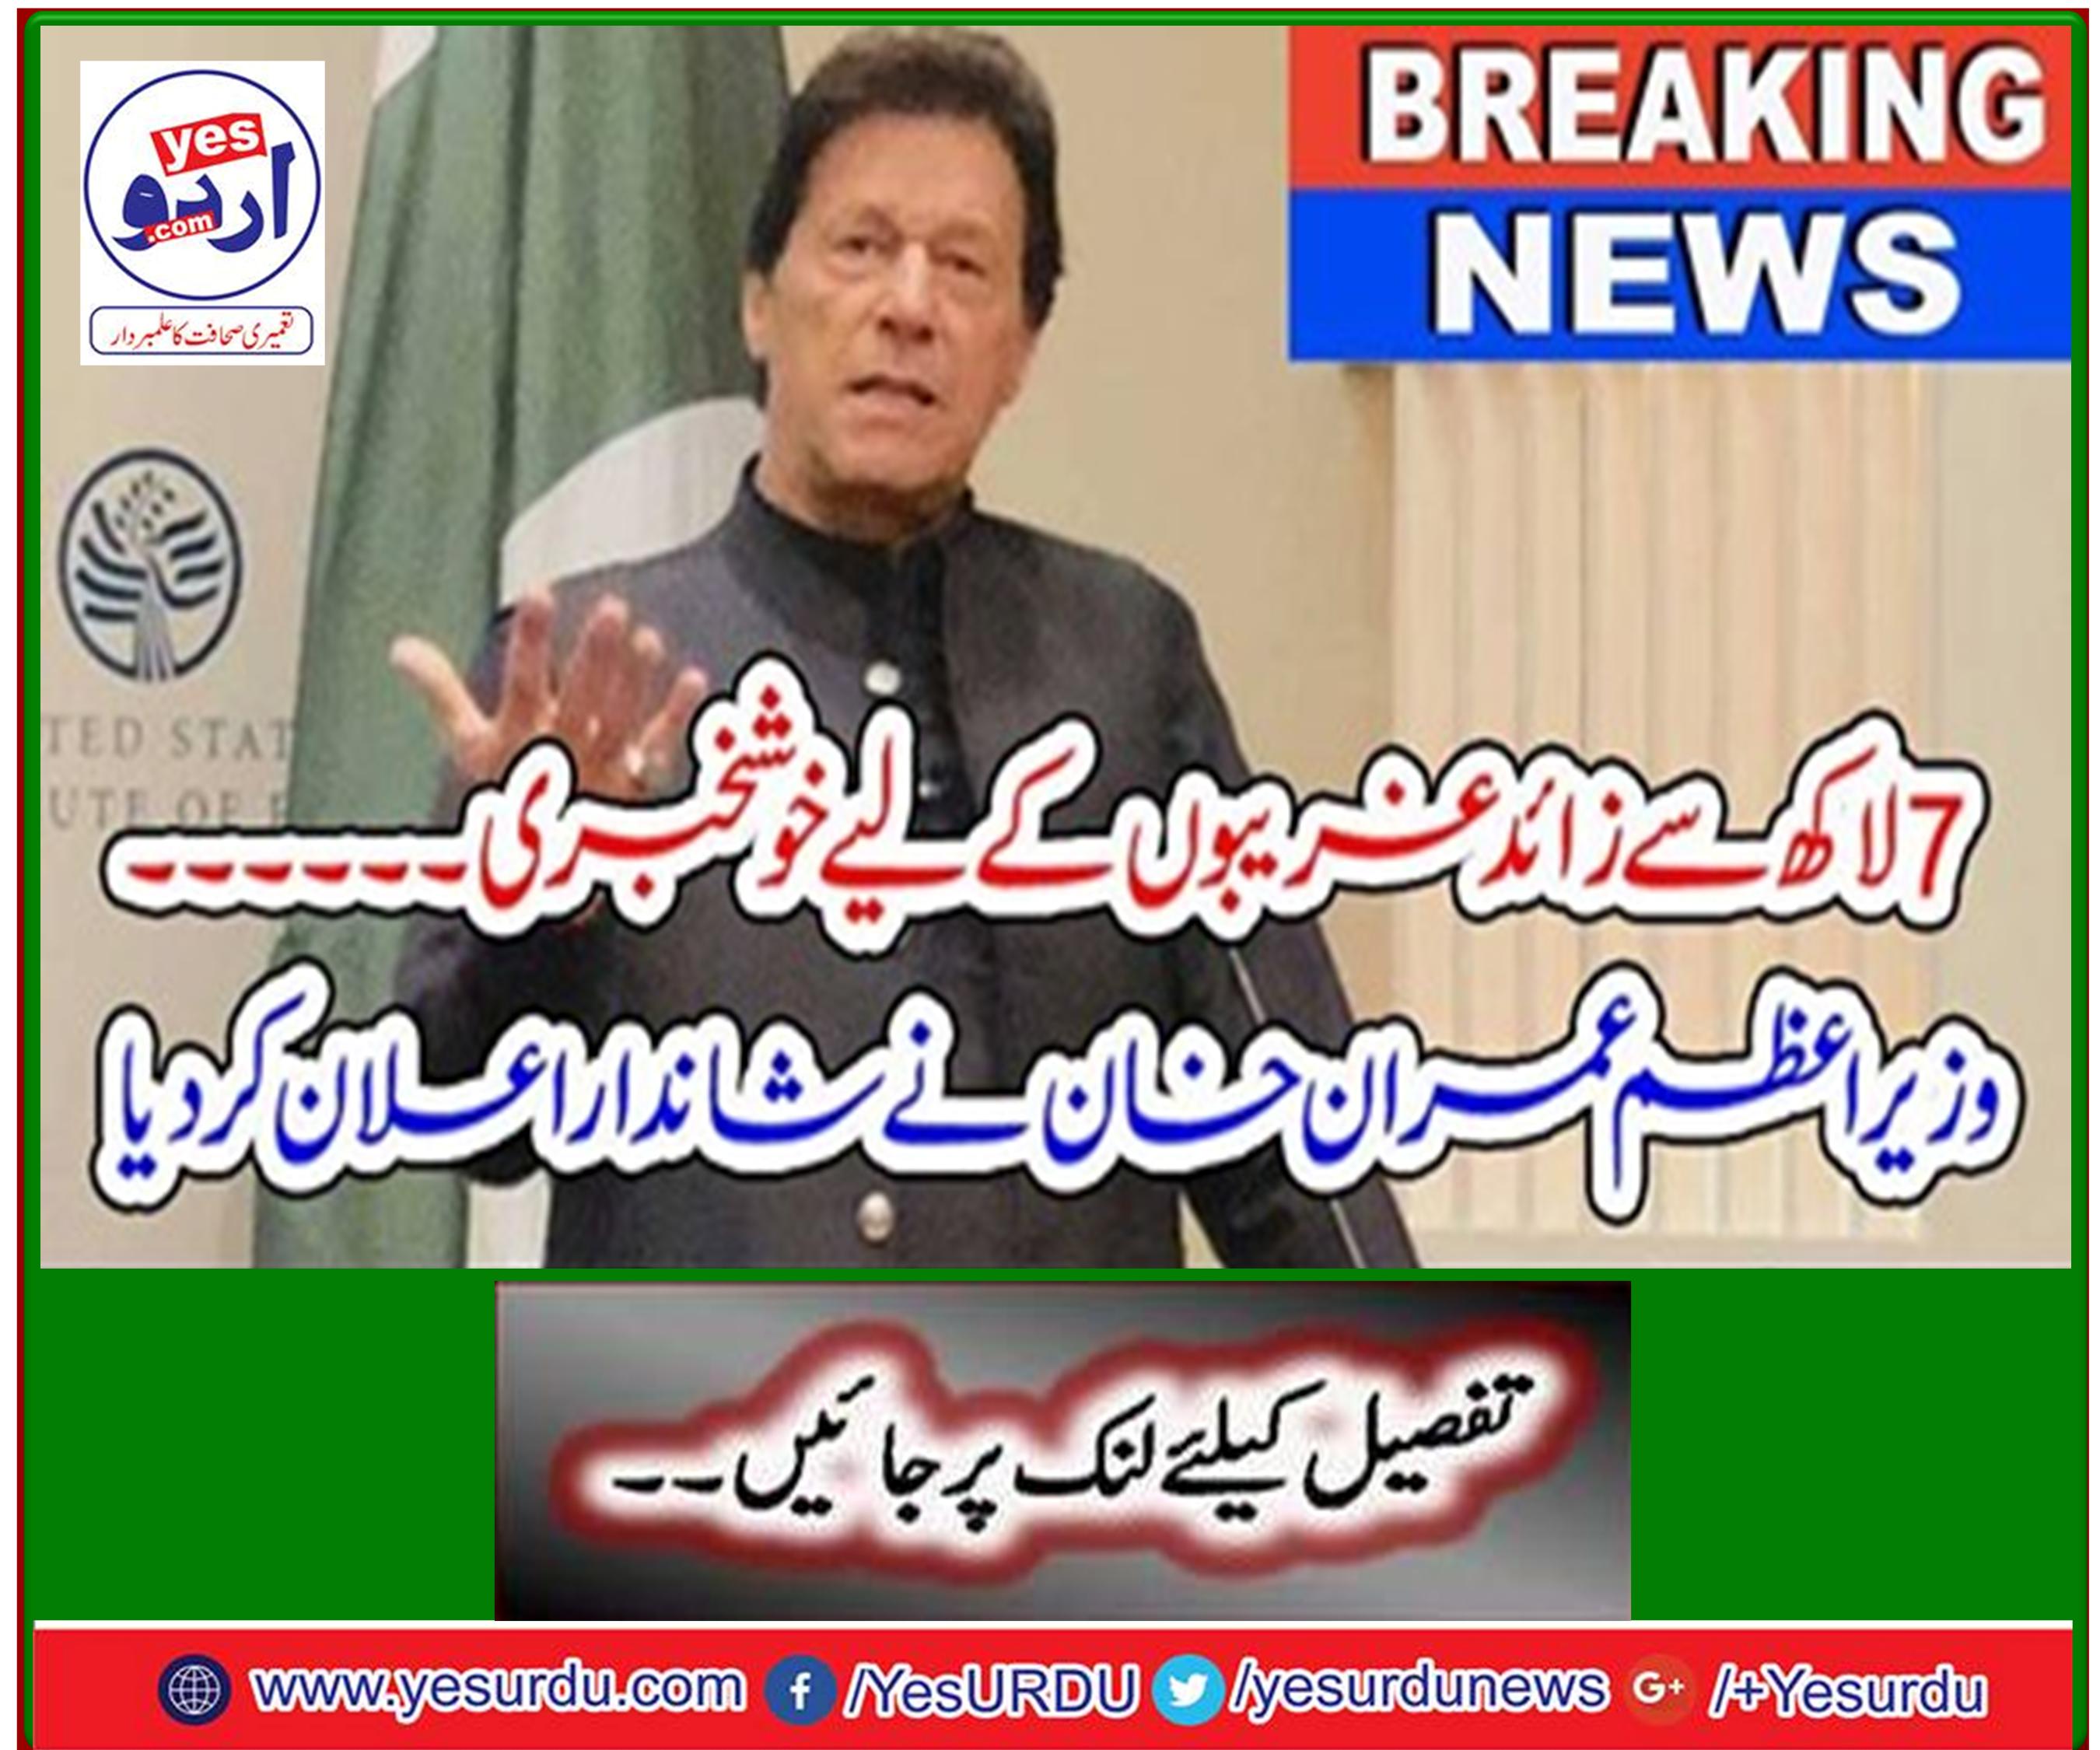 Breaking News Good news for more than 7 million poor ... - Imran Khan makes wonderful announcement